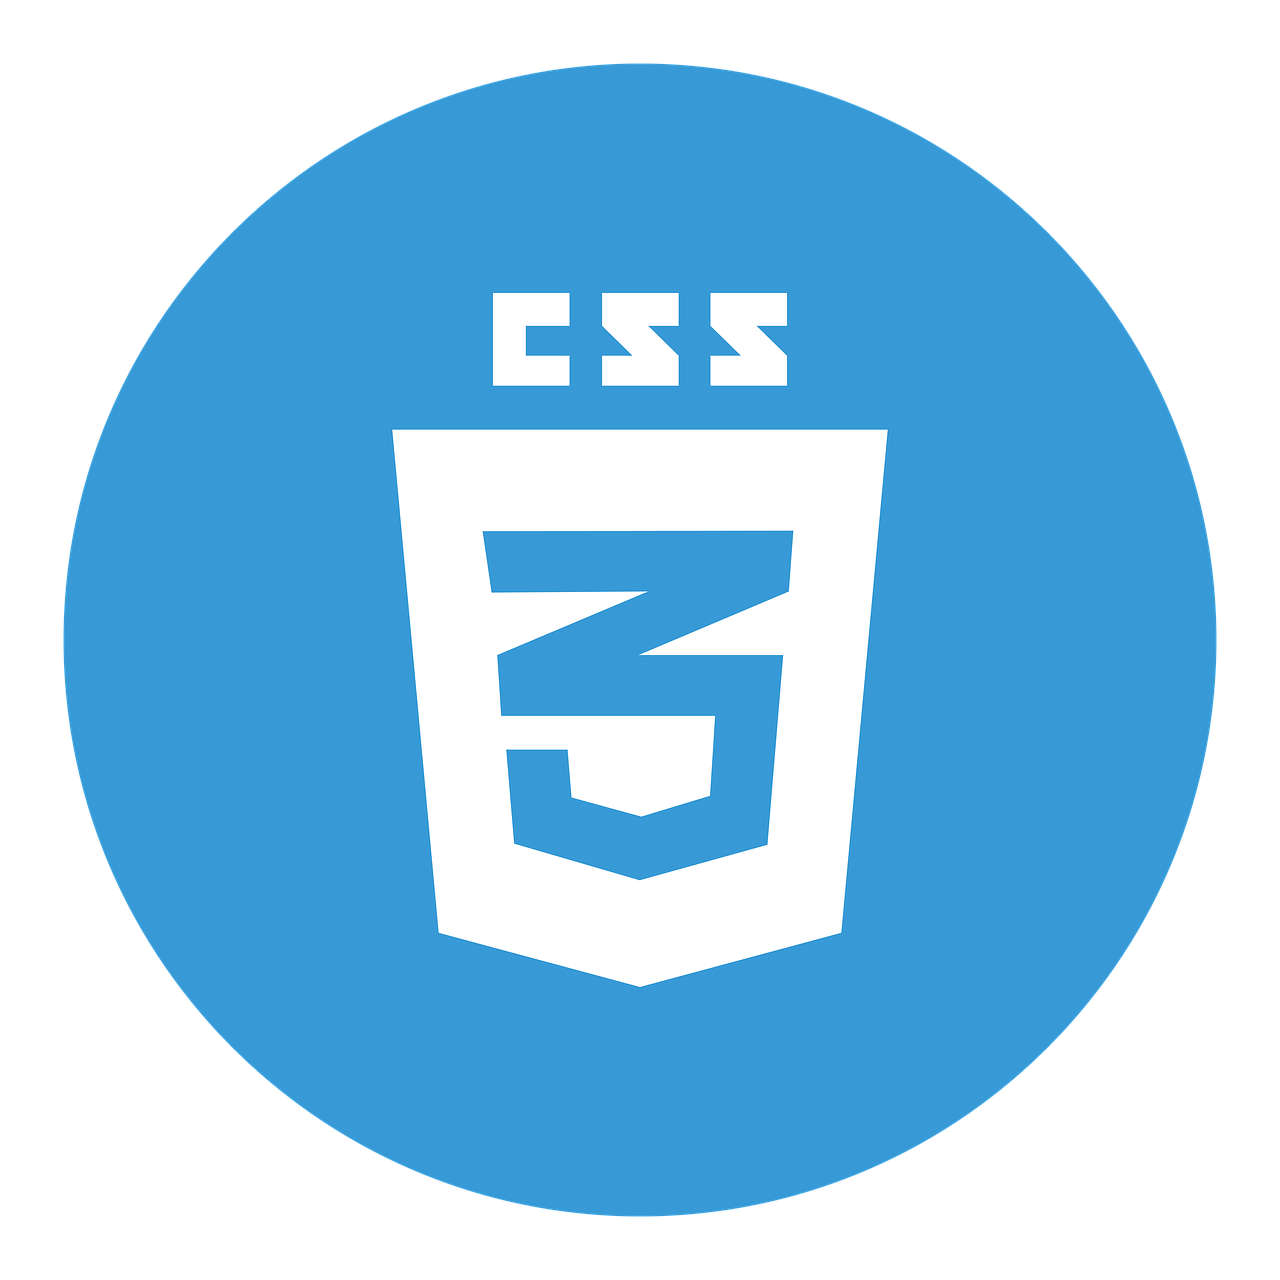 The CSS Language Logo